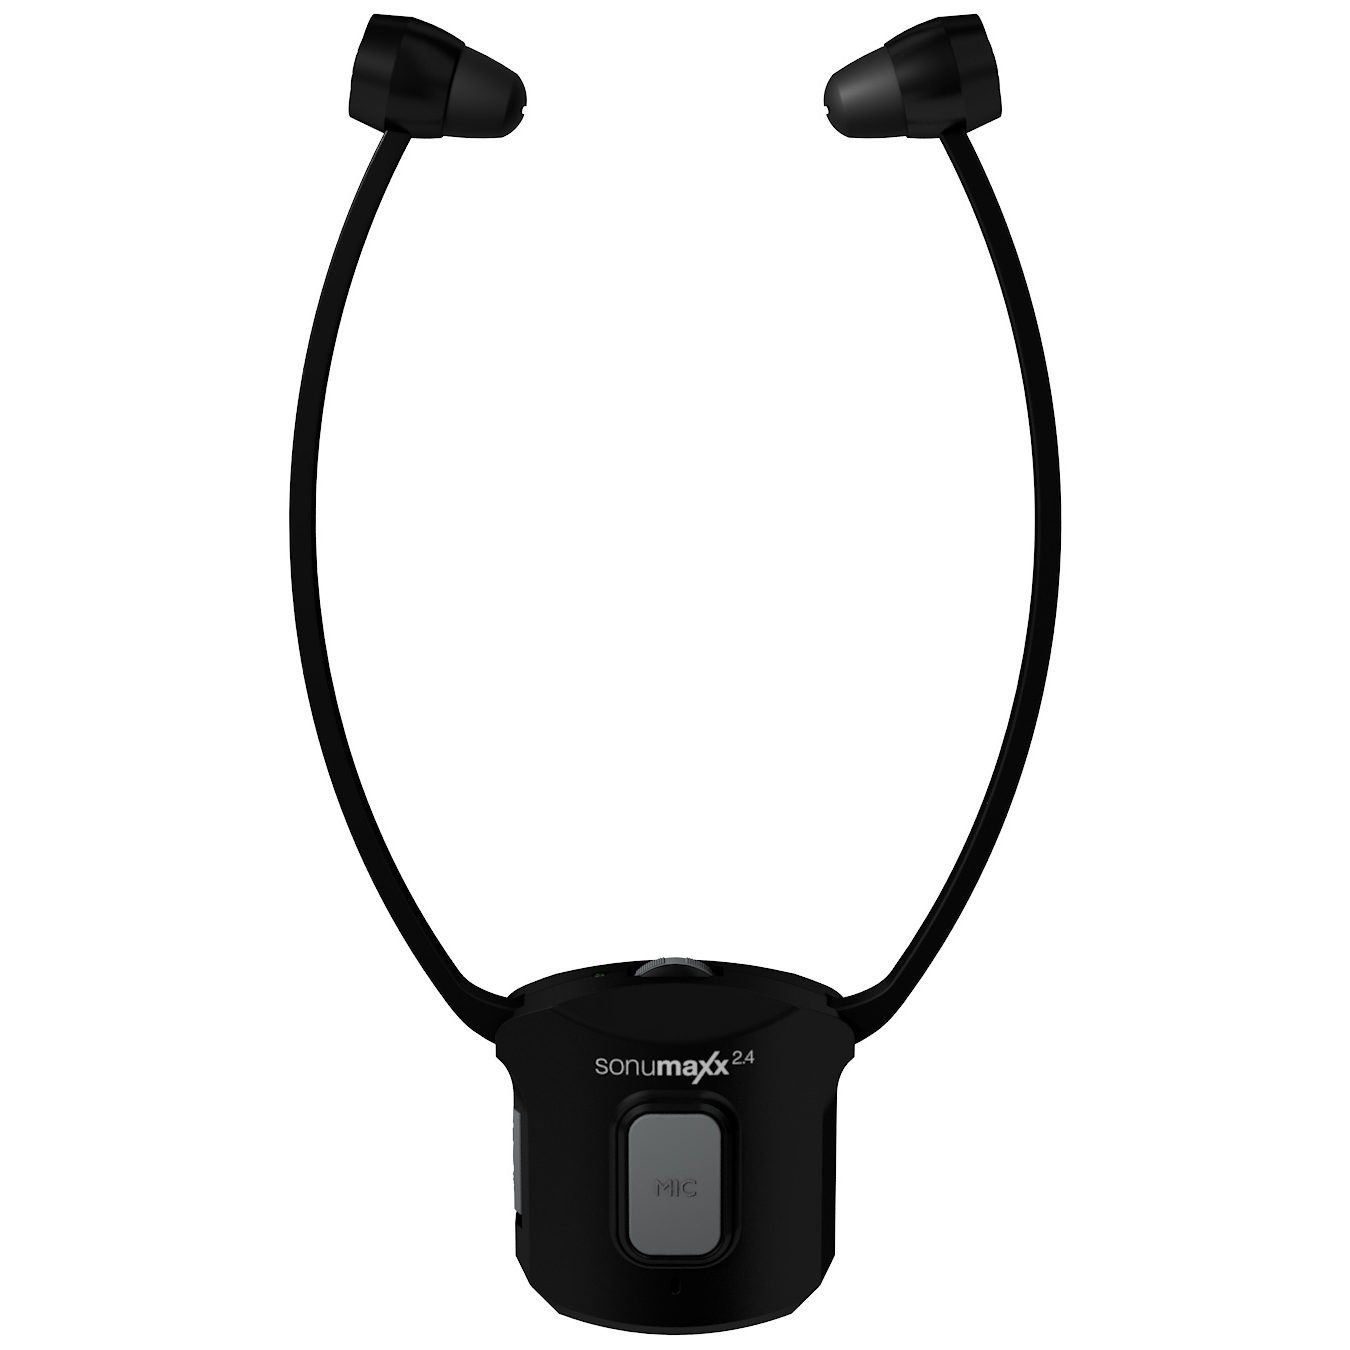 Sonumaxx 2.4 V2 Headset Receiver